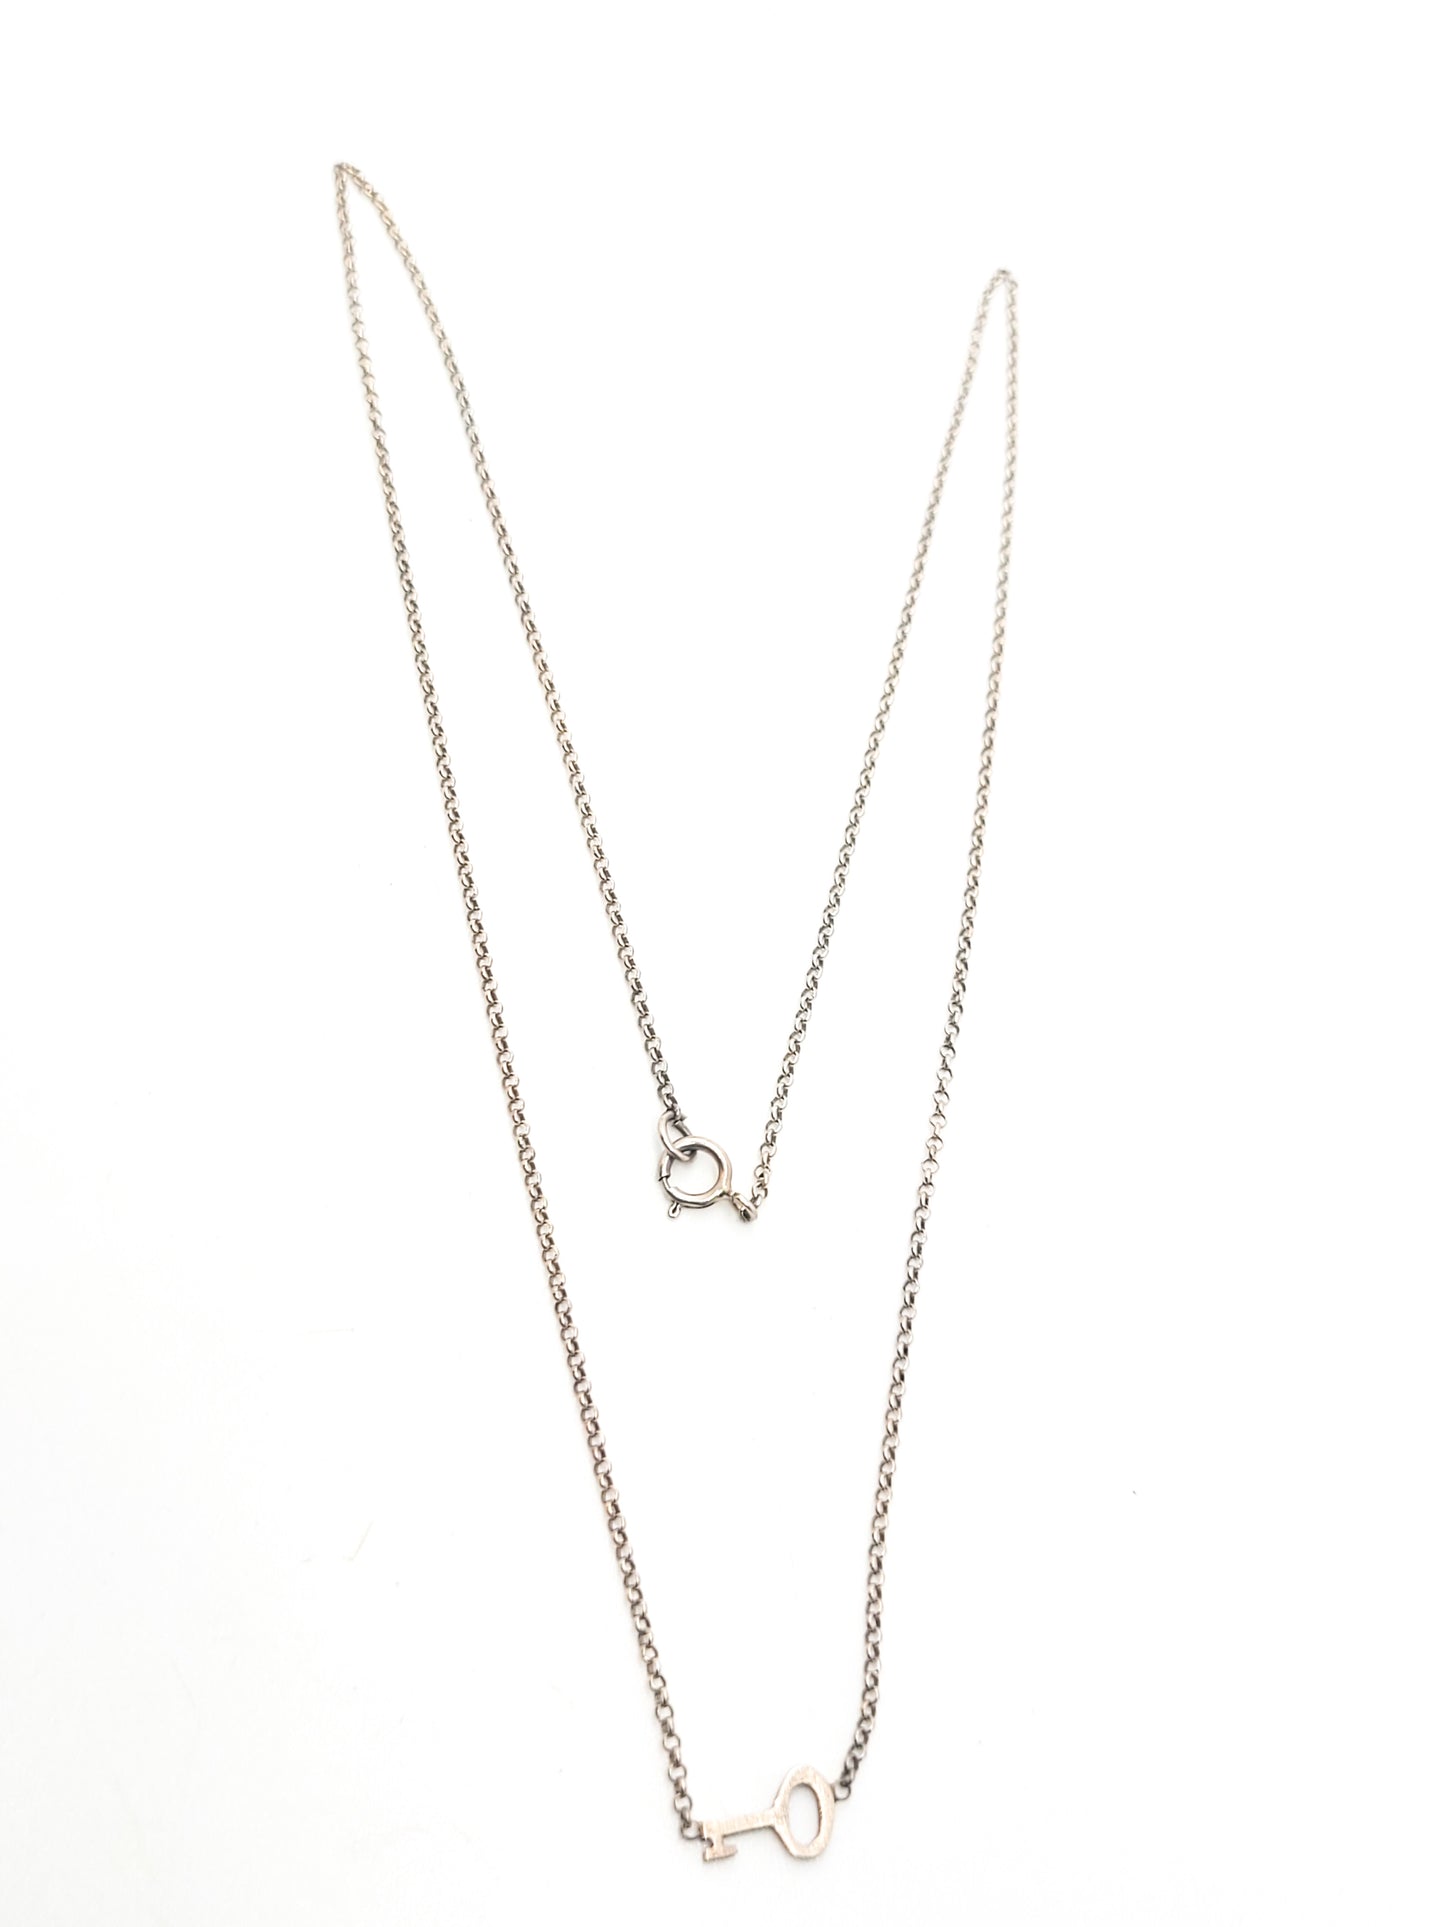 Secret Key delicate sterling silver dainty vintage chain necklace 925